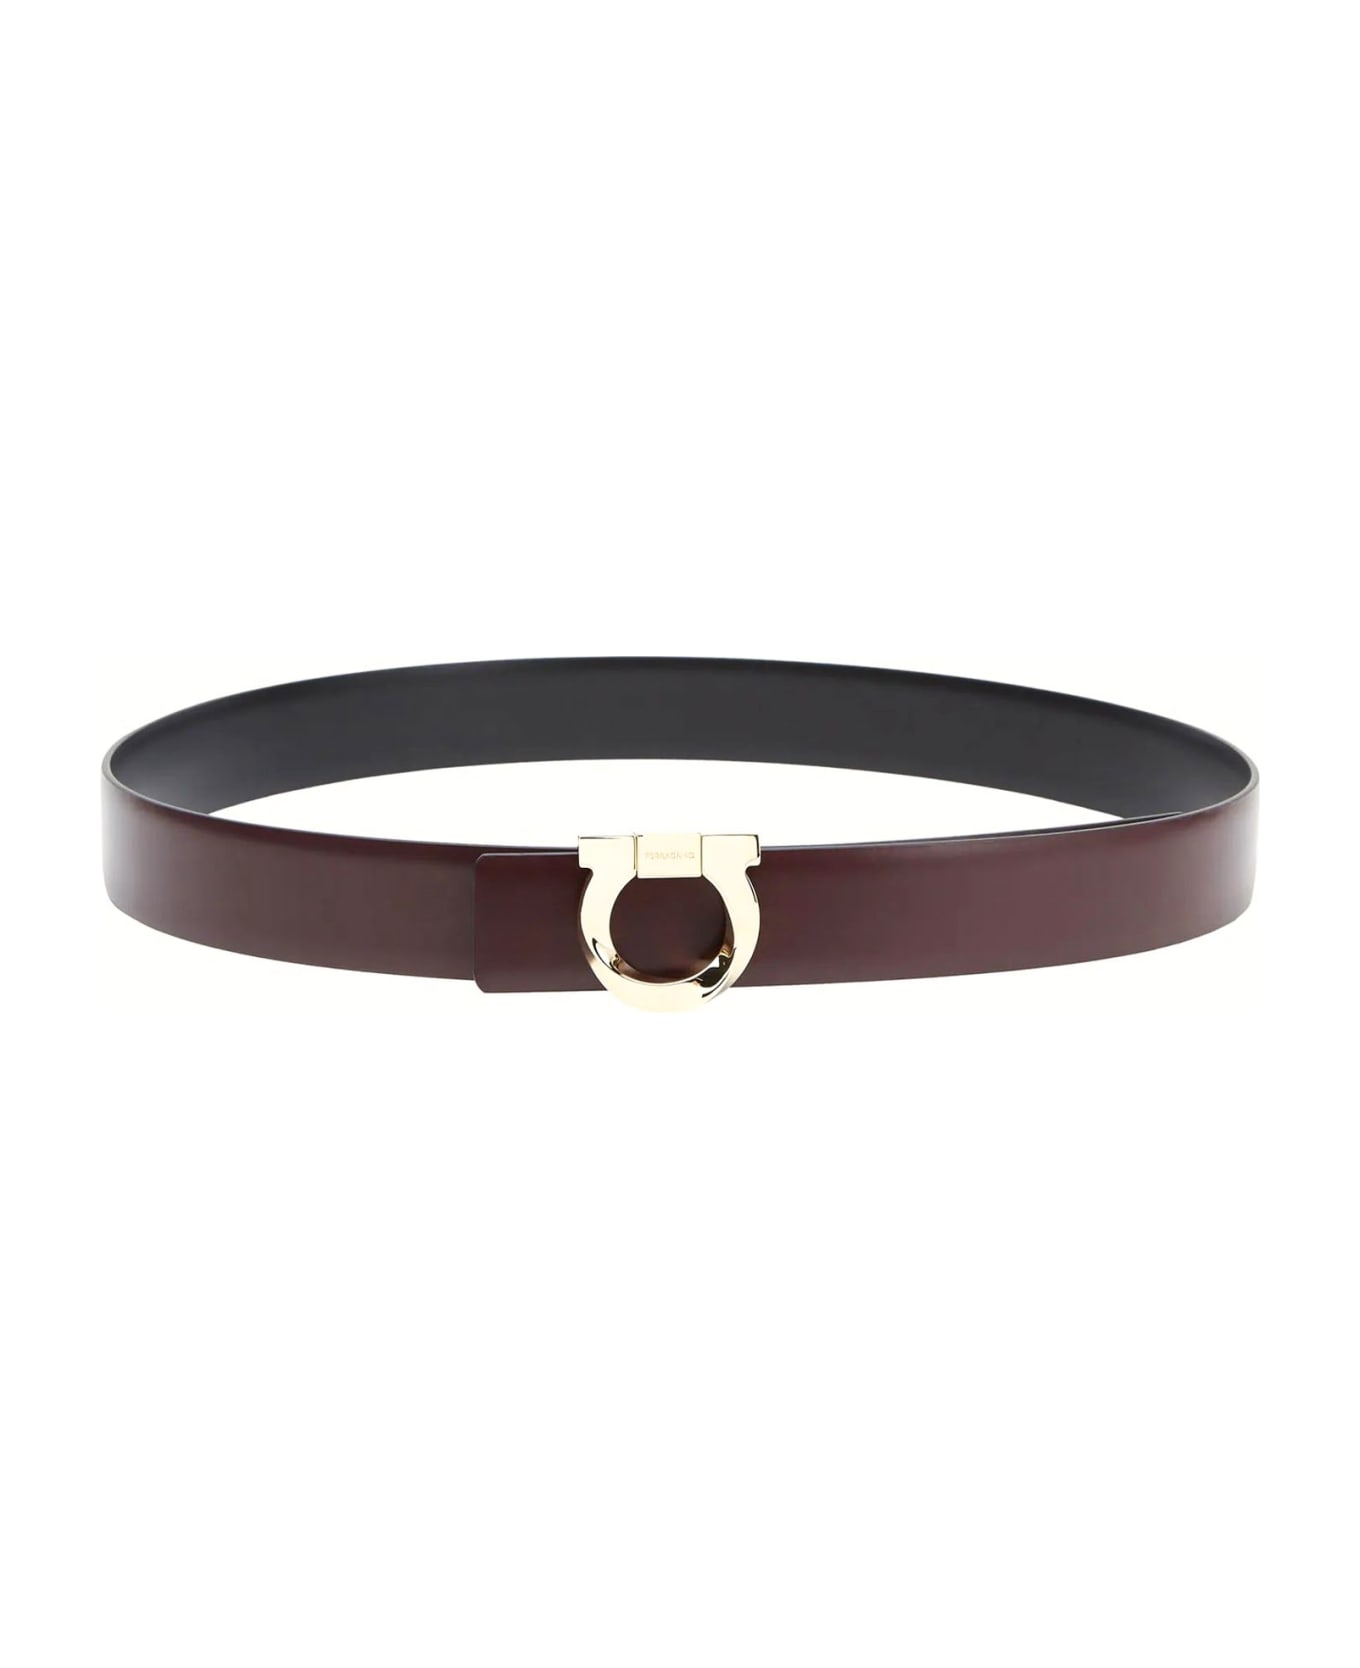 Ferragamo Gancini Leather Belt, Bordeaux Red - Red ベルト